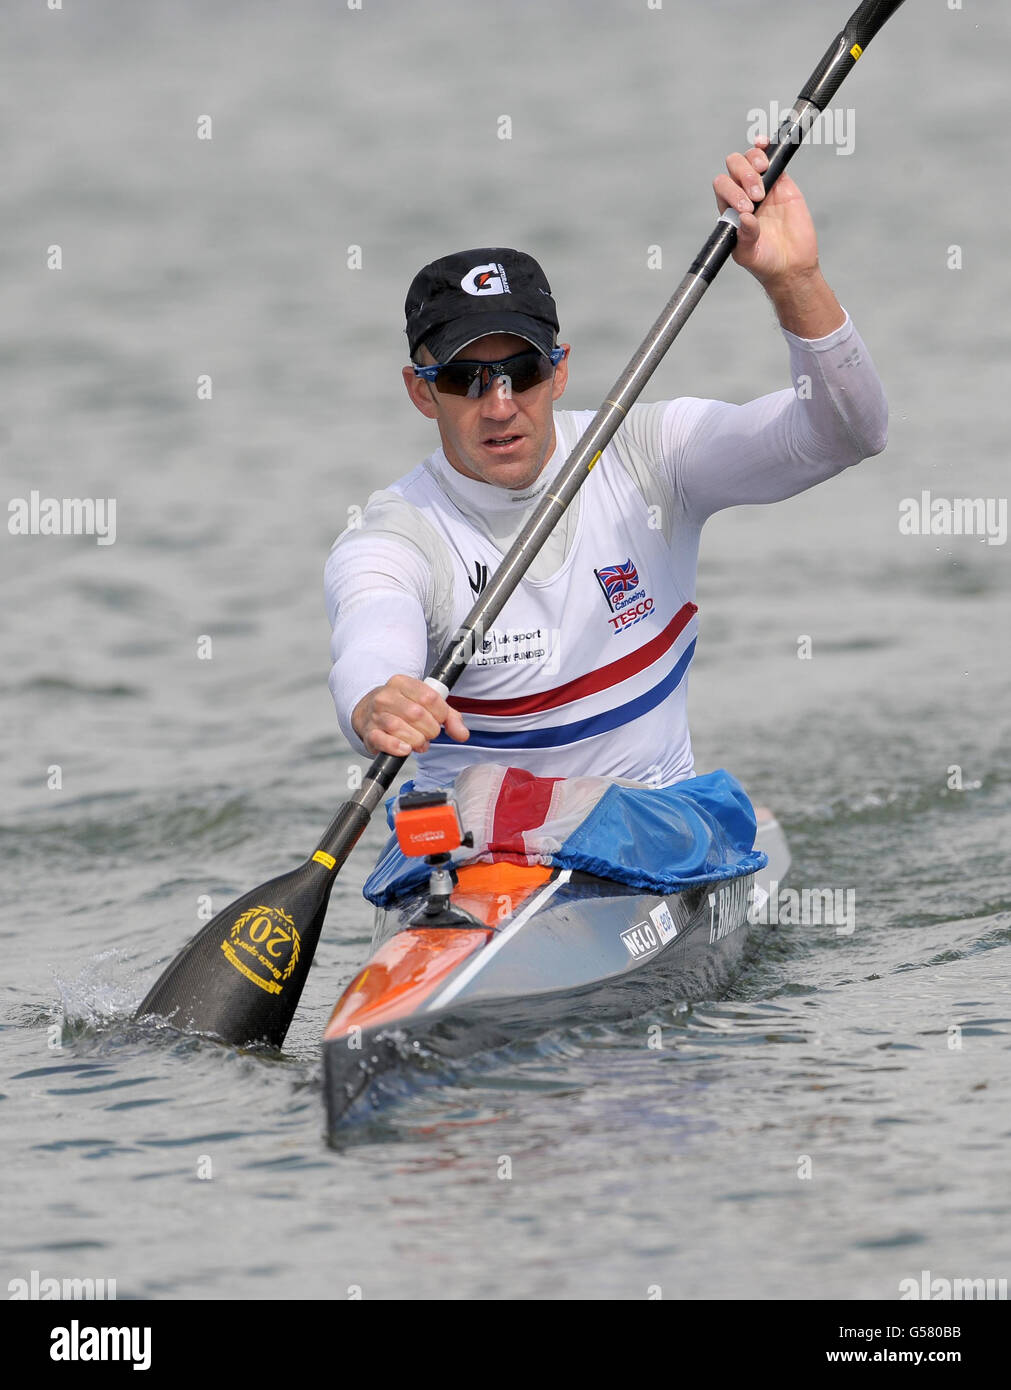 Olympics - Canoeing - Team GB Canoe Sprint Announcement - Eton College Rowing Centre Stock Photo